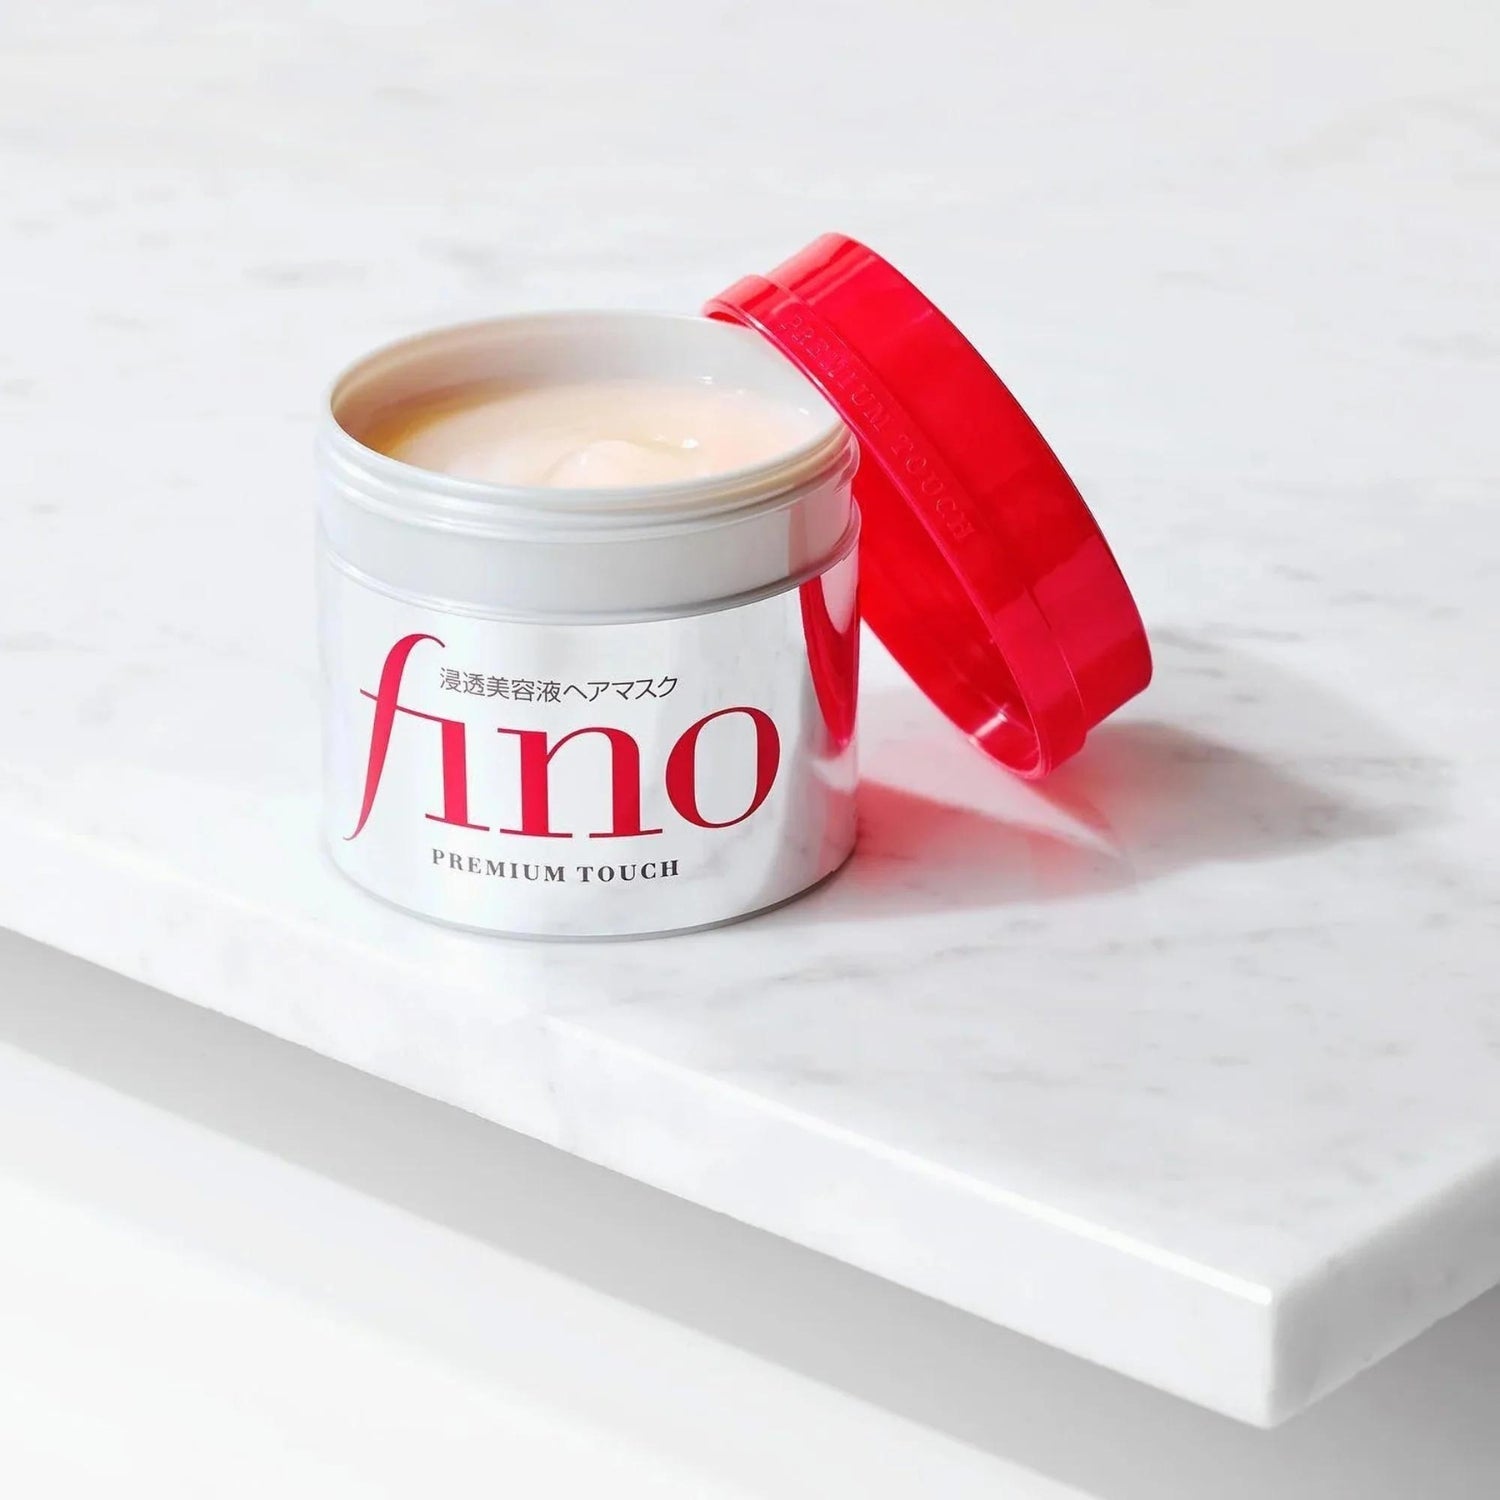 Fino Premium Touch Hair Mask - Shiseido | Kiokii and...